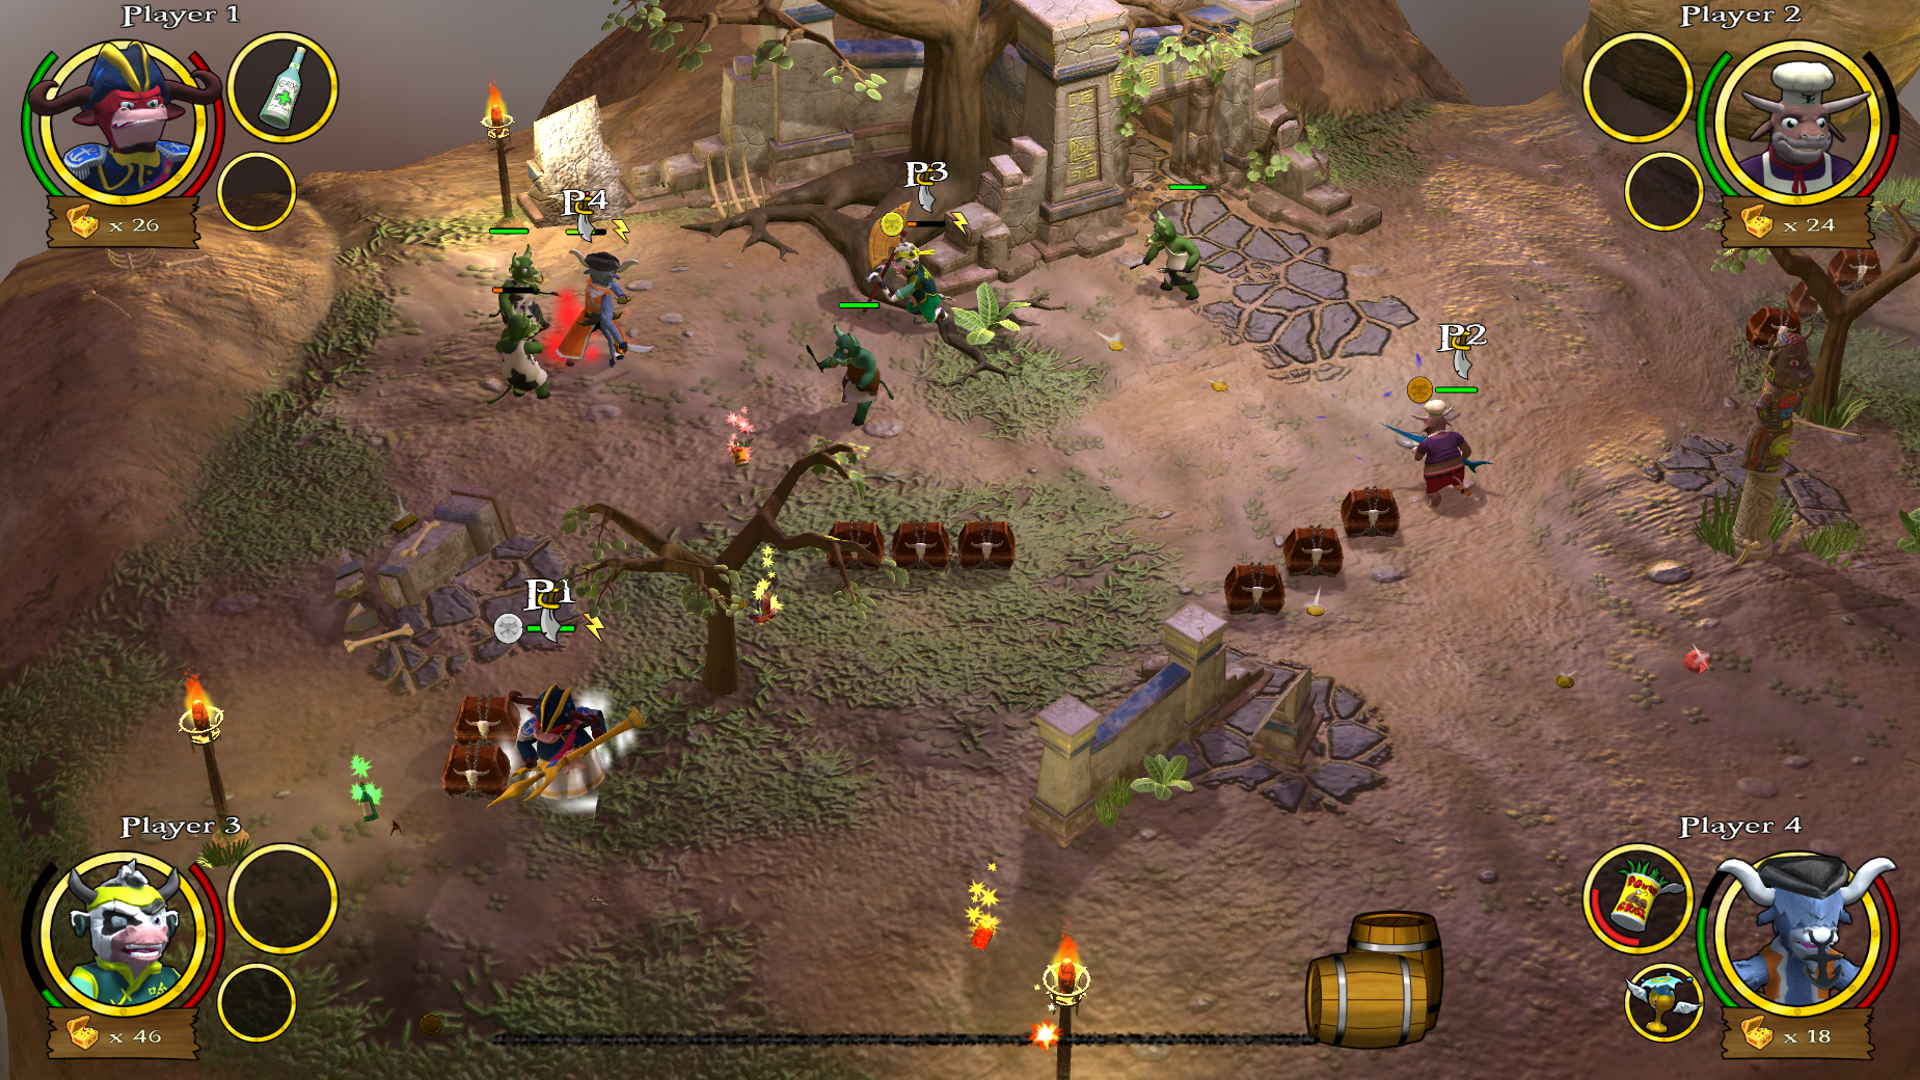 Avarice (timed) game mode, Ragu Ruins arena